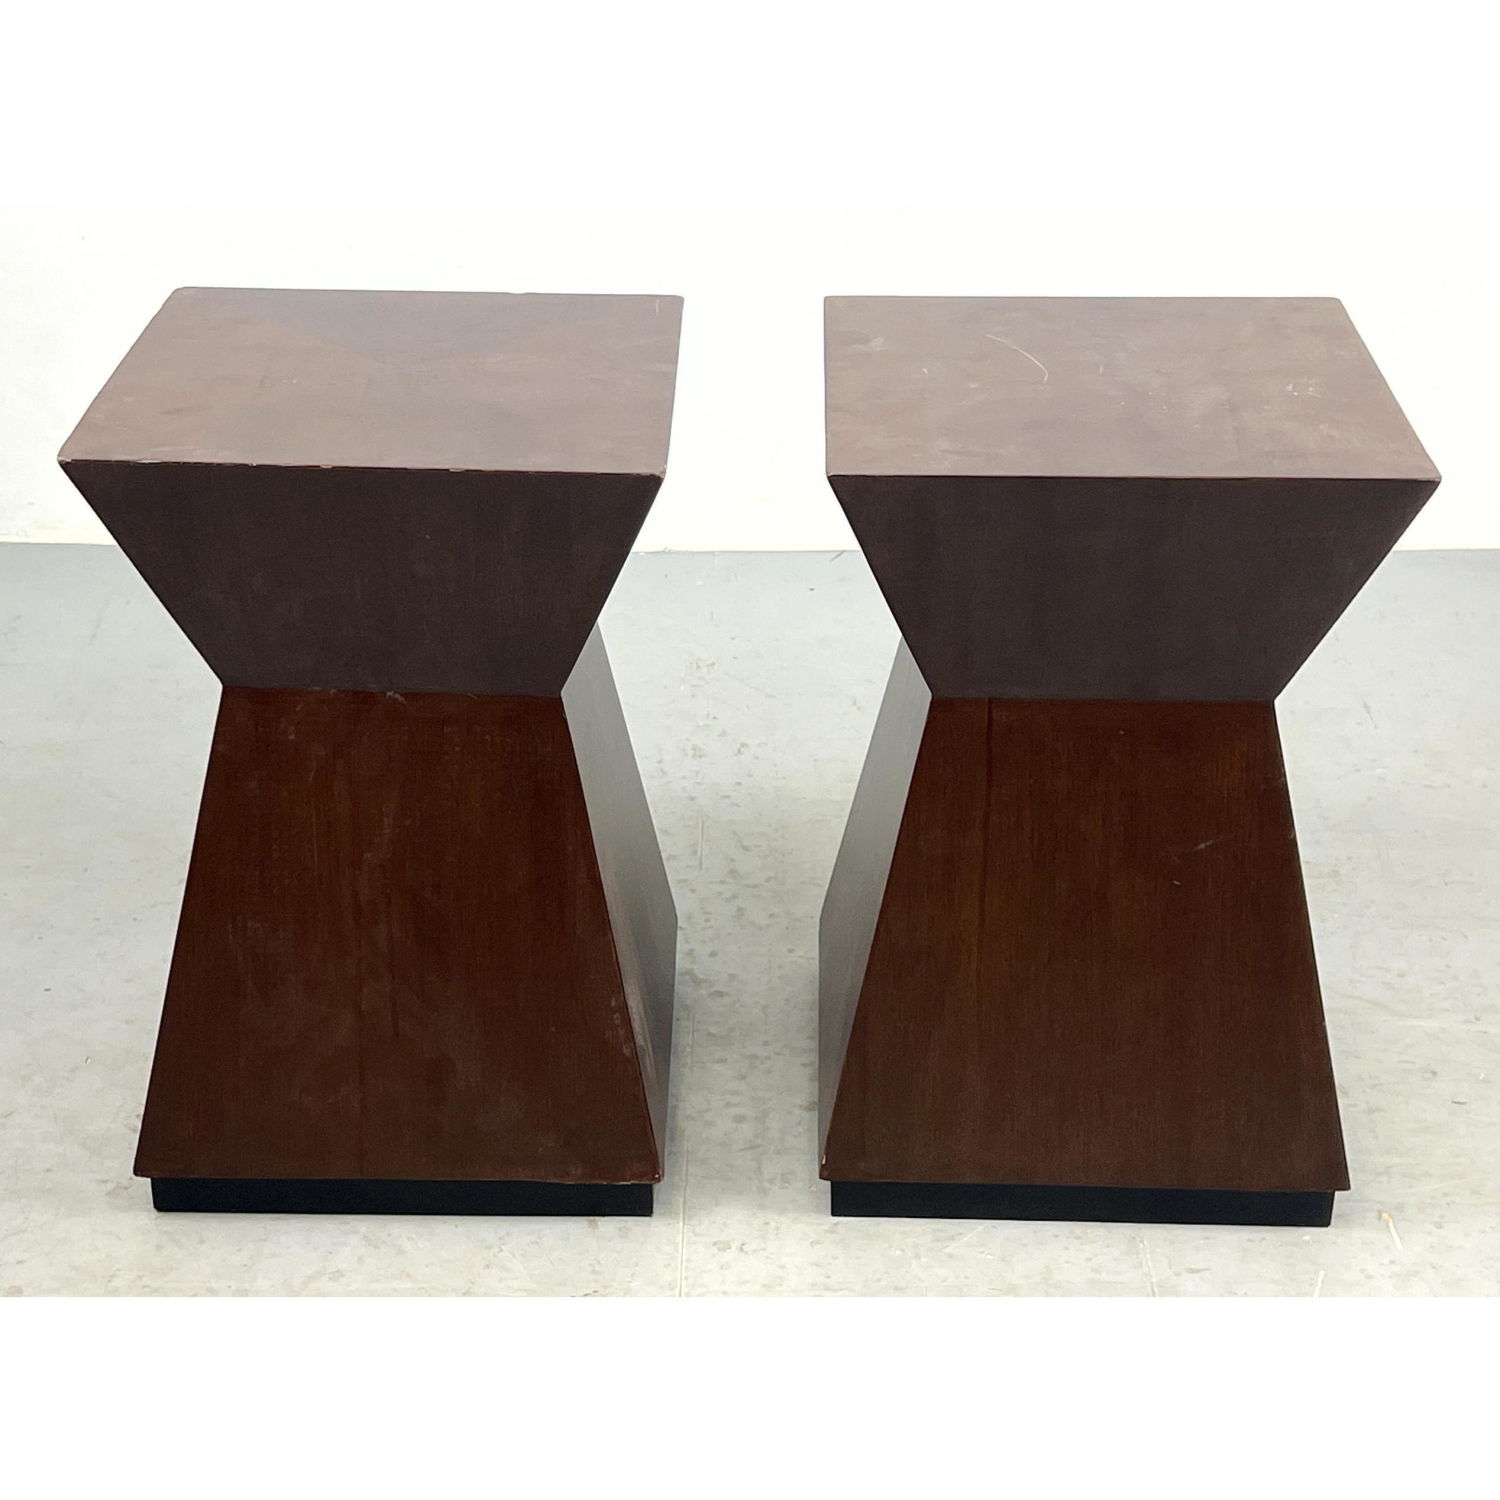 Pair Corseted Stool Pedestal Tables  2ff44e